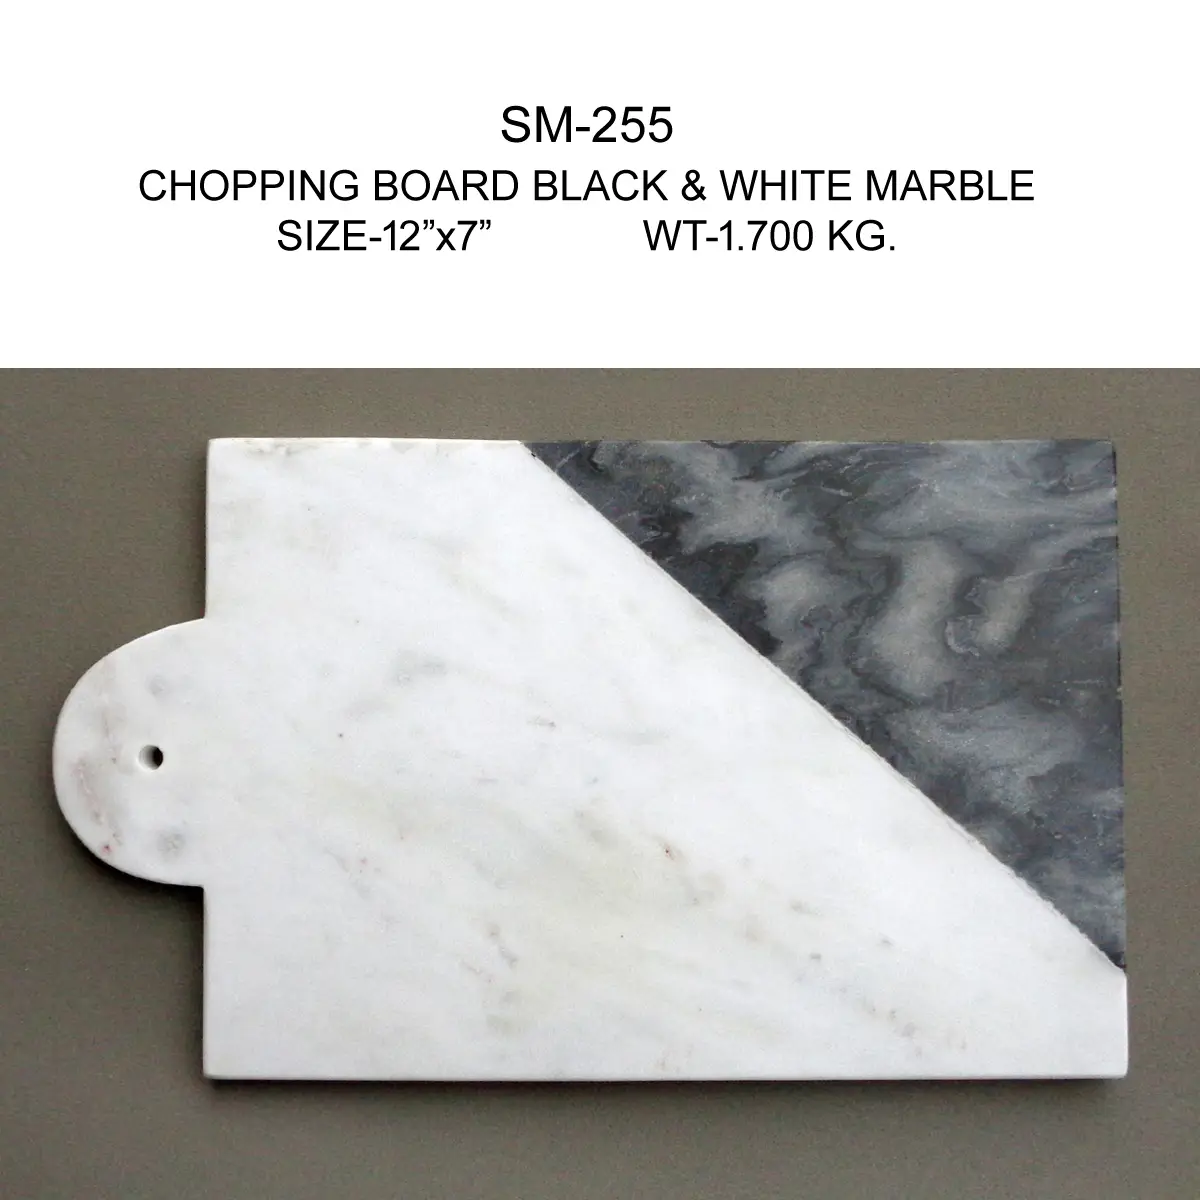 CHOPPIN BOARD BLACK & WHITE MARBLE